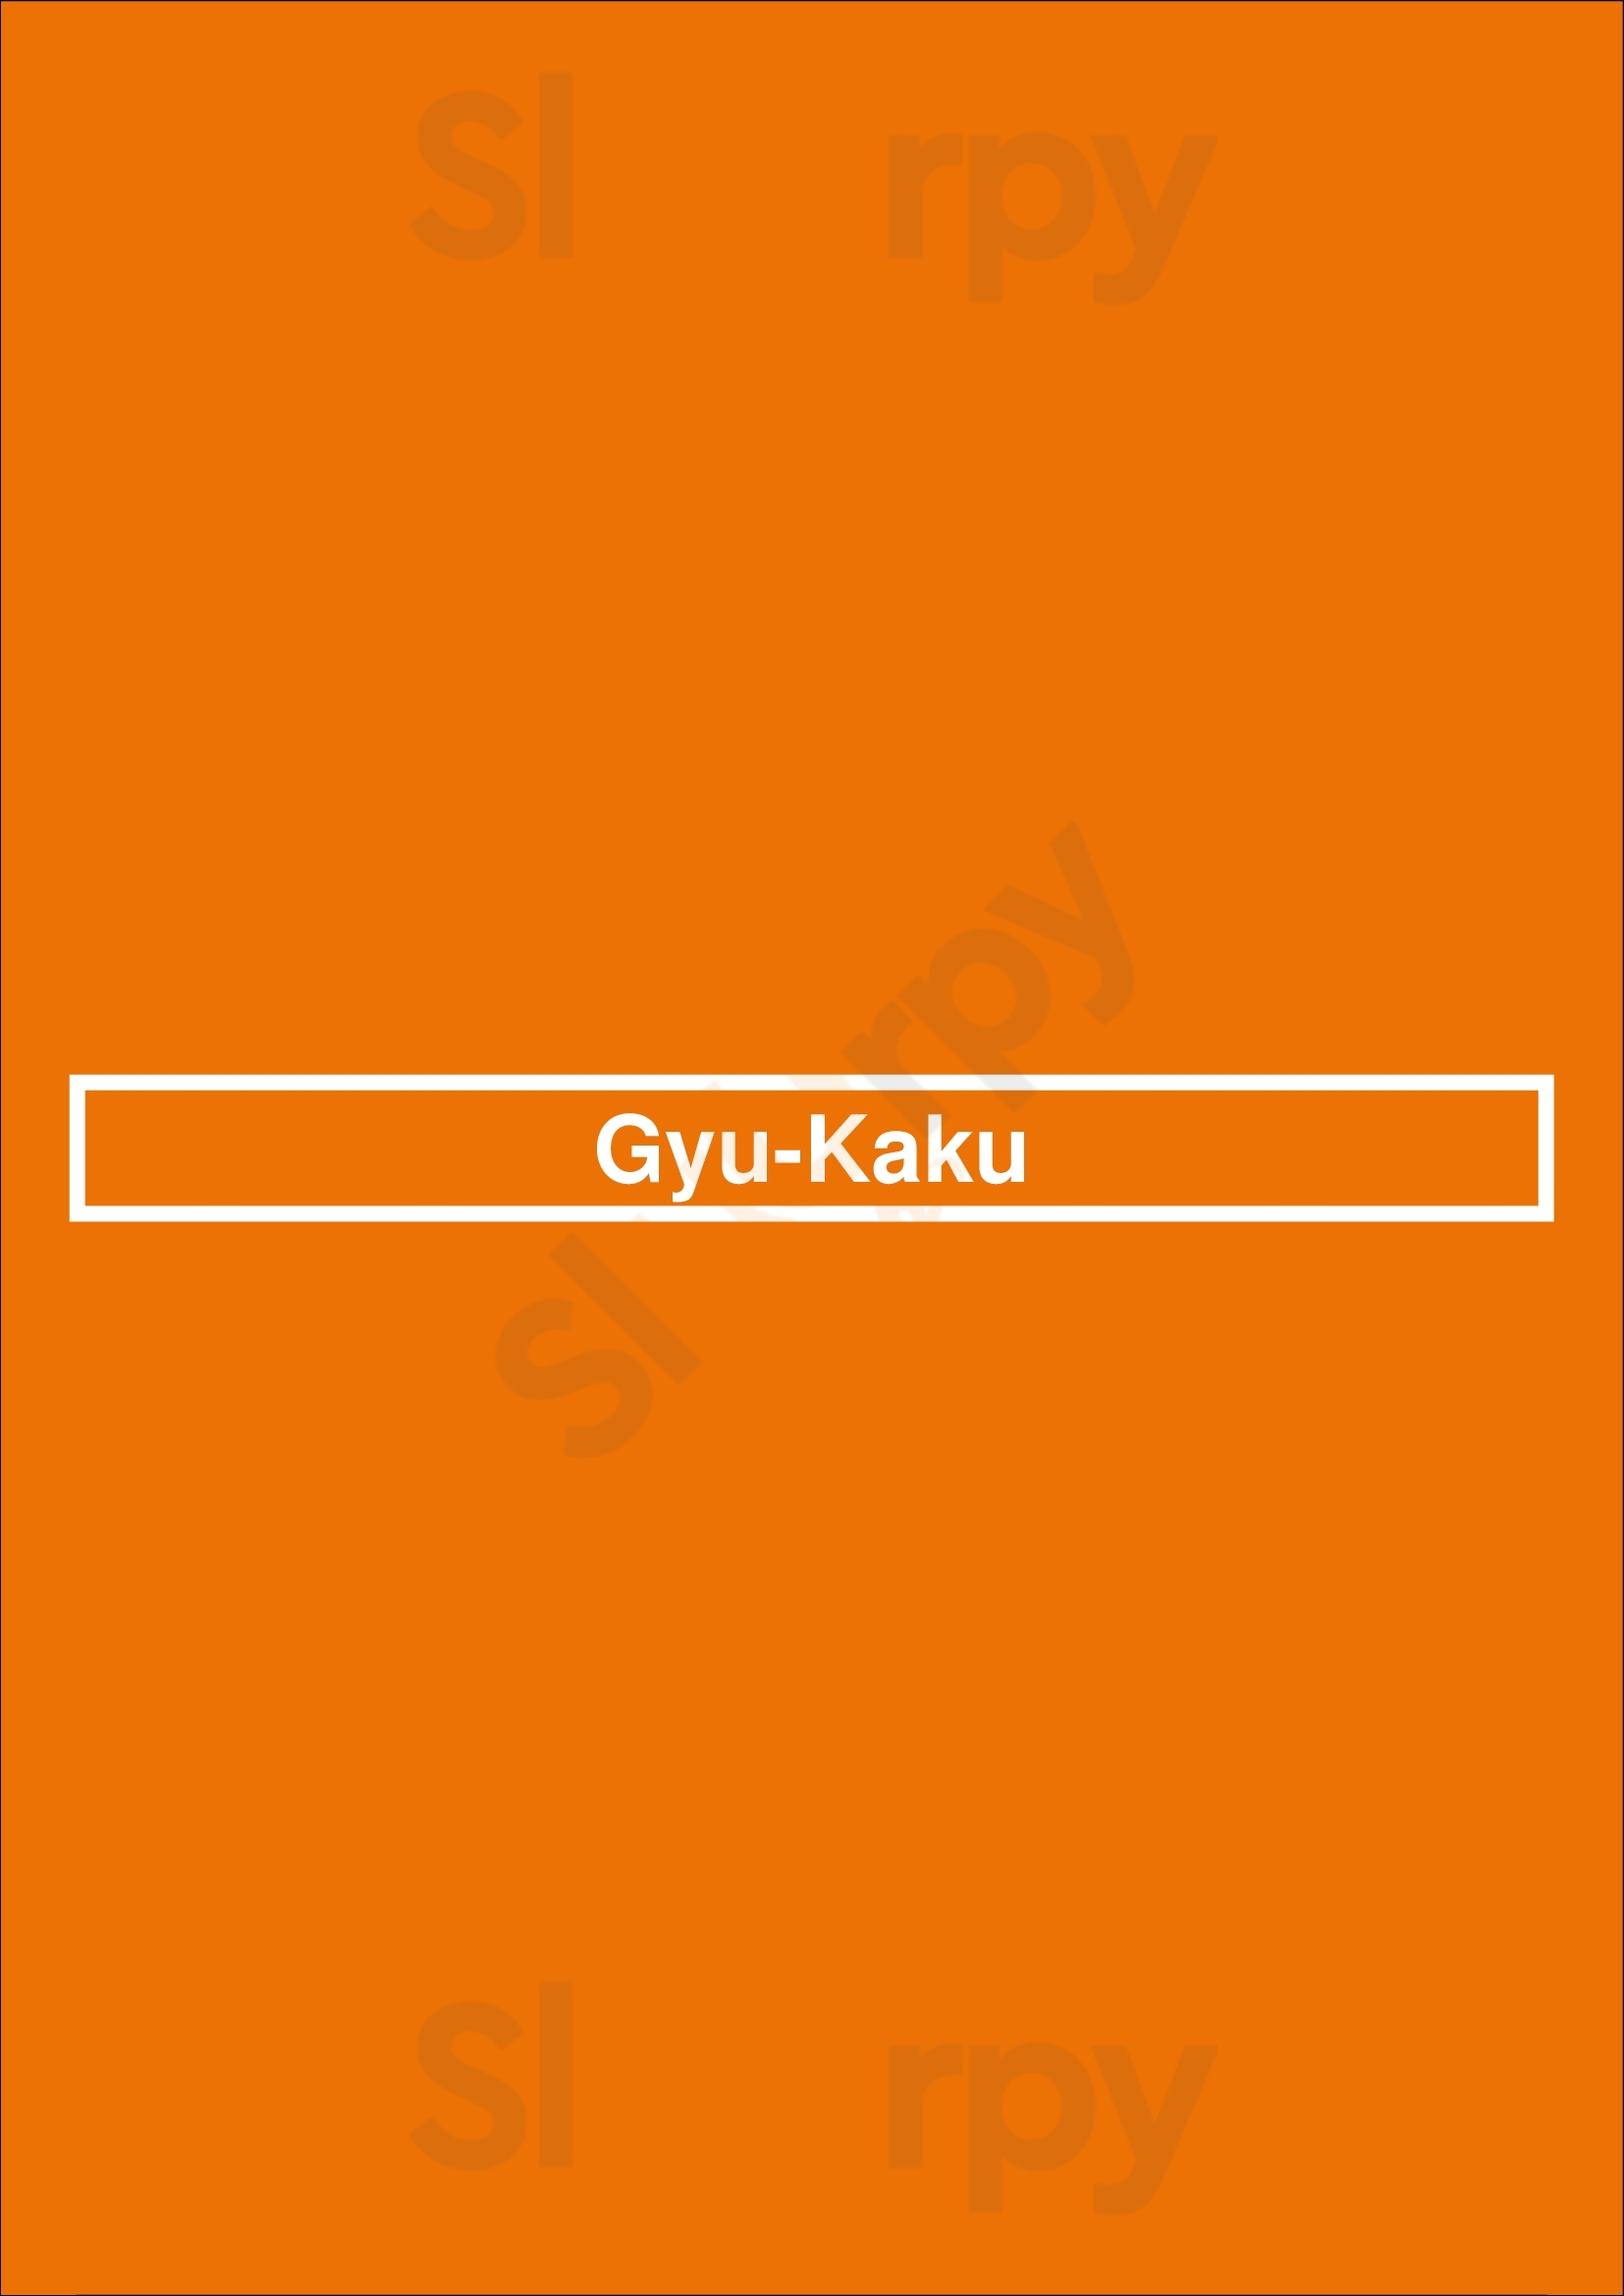 Gyu-kaku Japanese Bbq Richmond Menu - 1